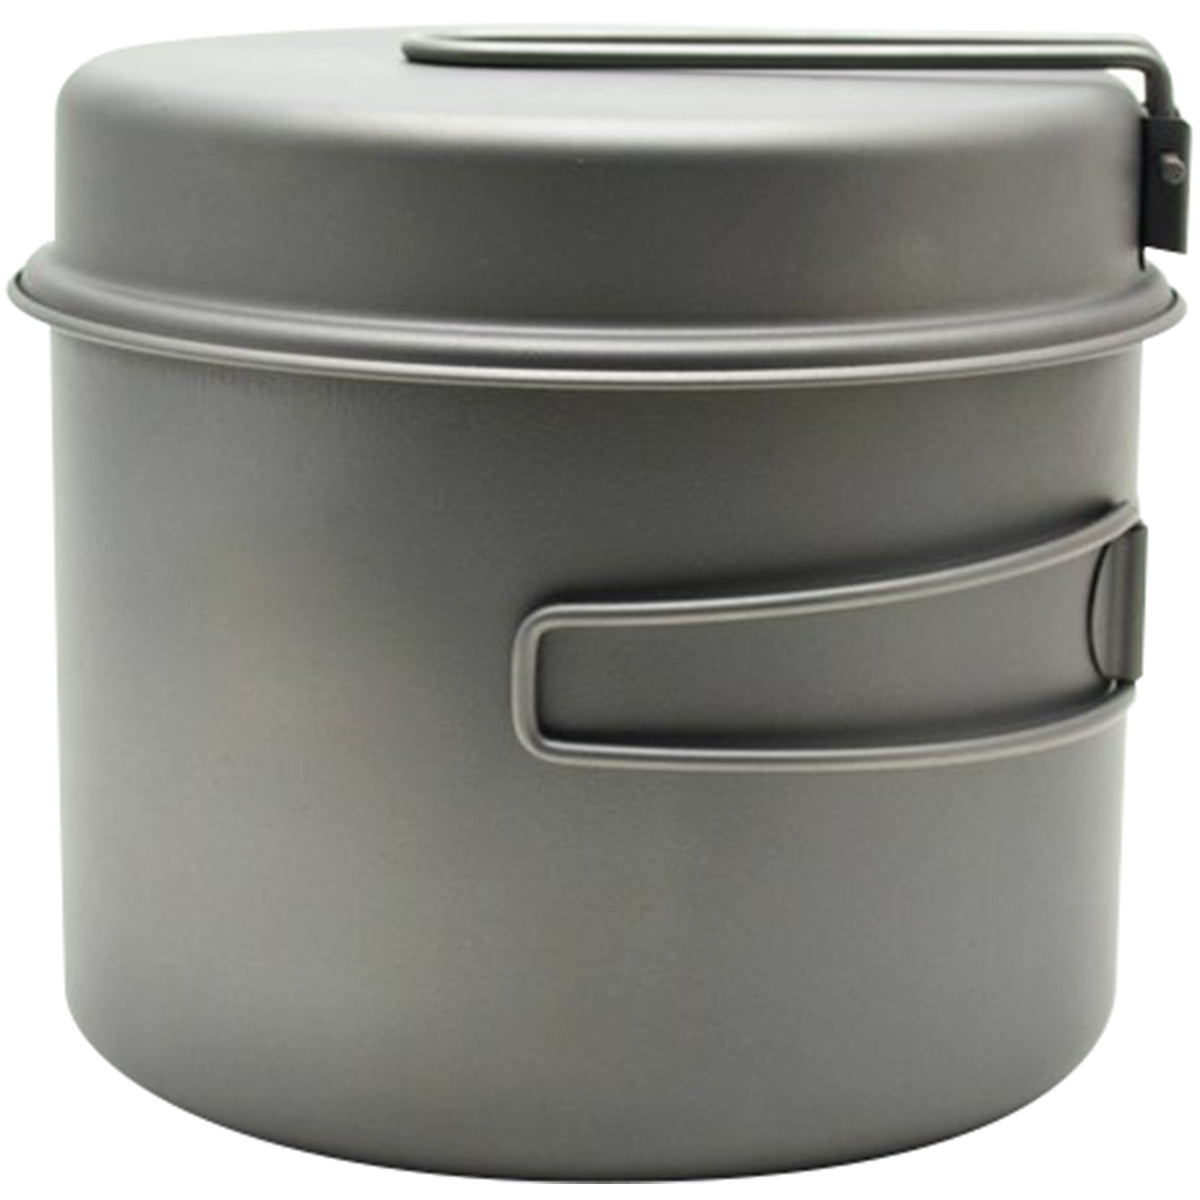 TOAKS Titanium Outdoor Camping Cook Pot with Pan and Foldable Handles - 1600ml TOAKS